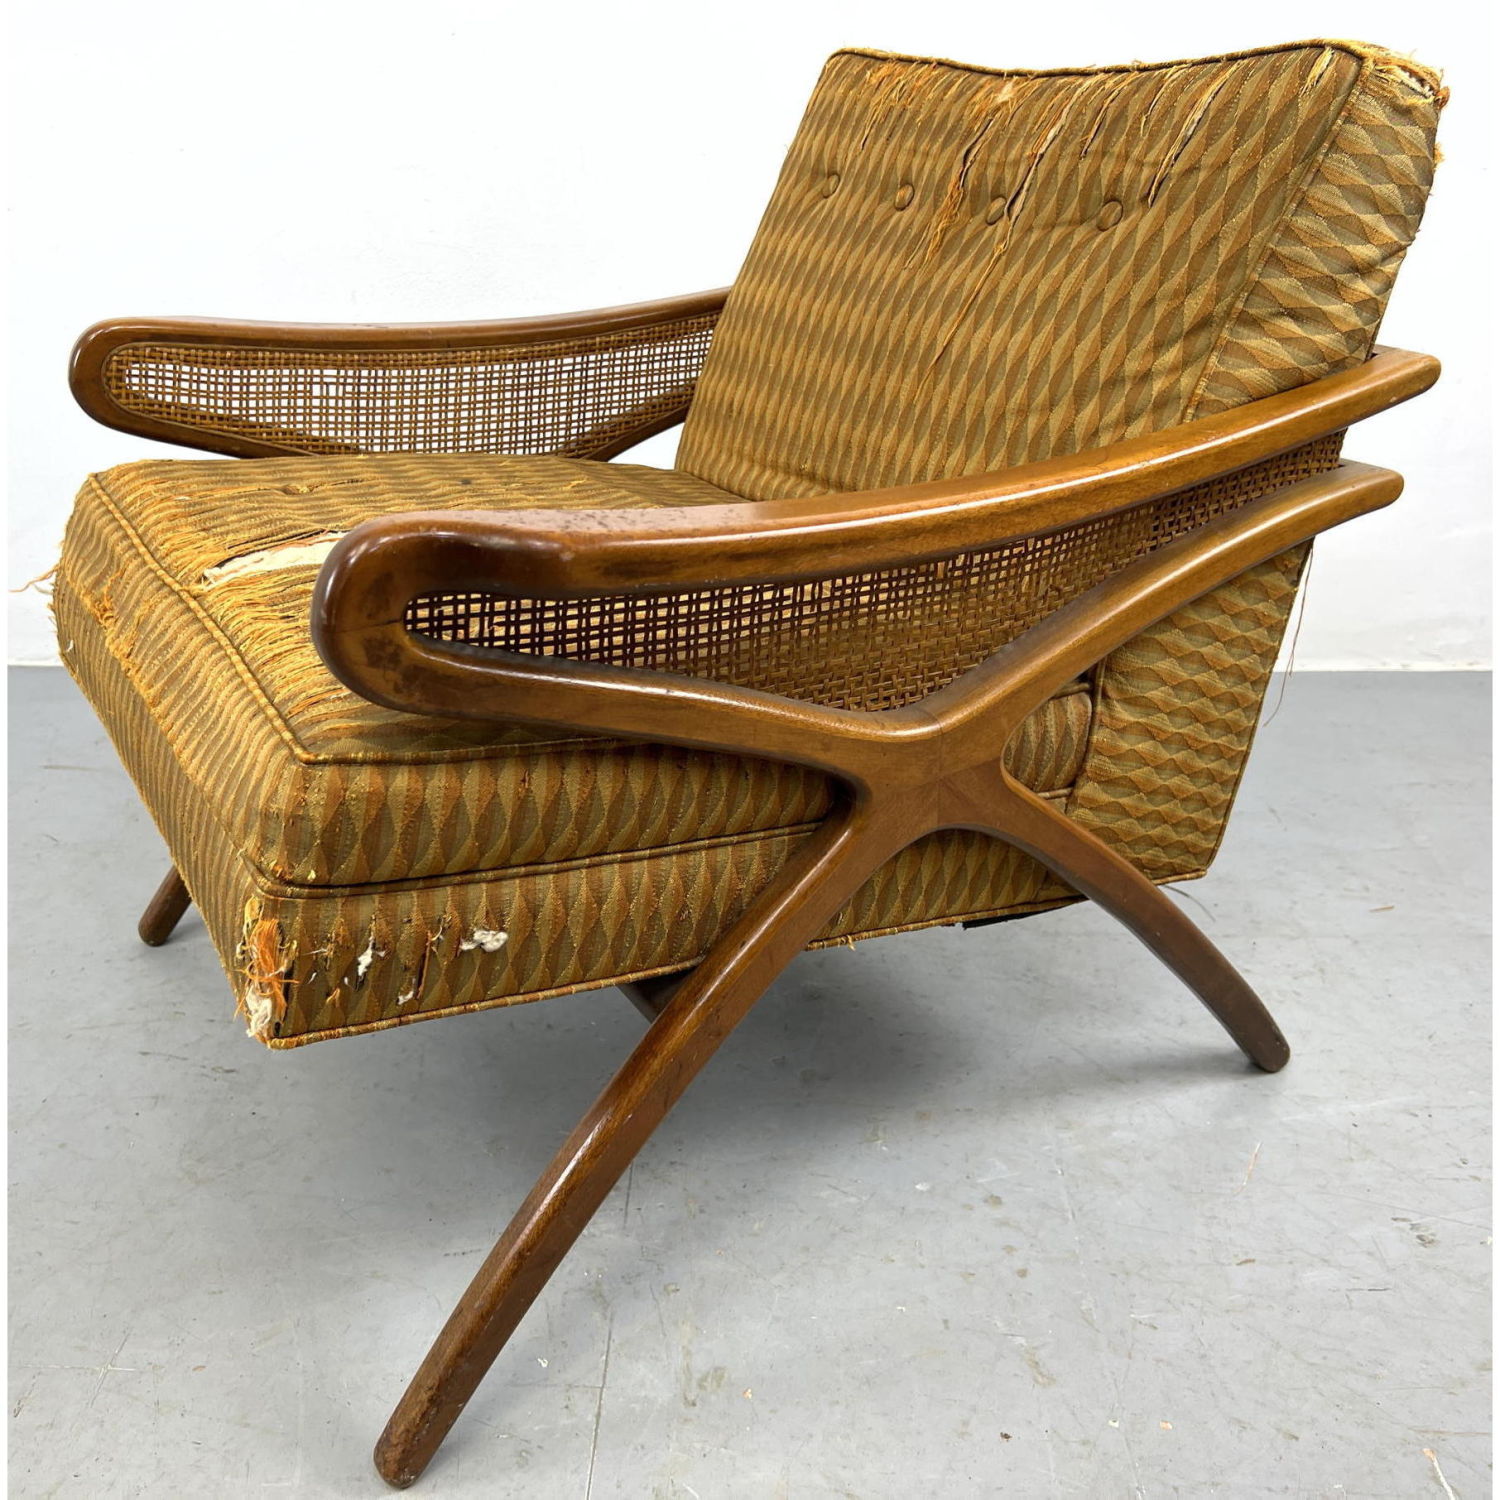 Elegant Italian style Wood Lounge Chair.